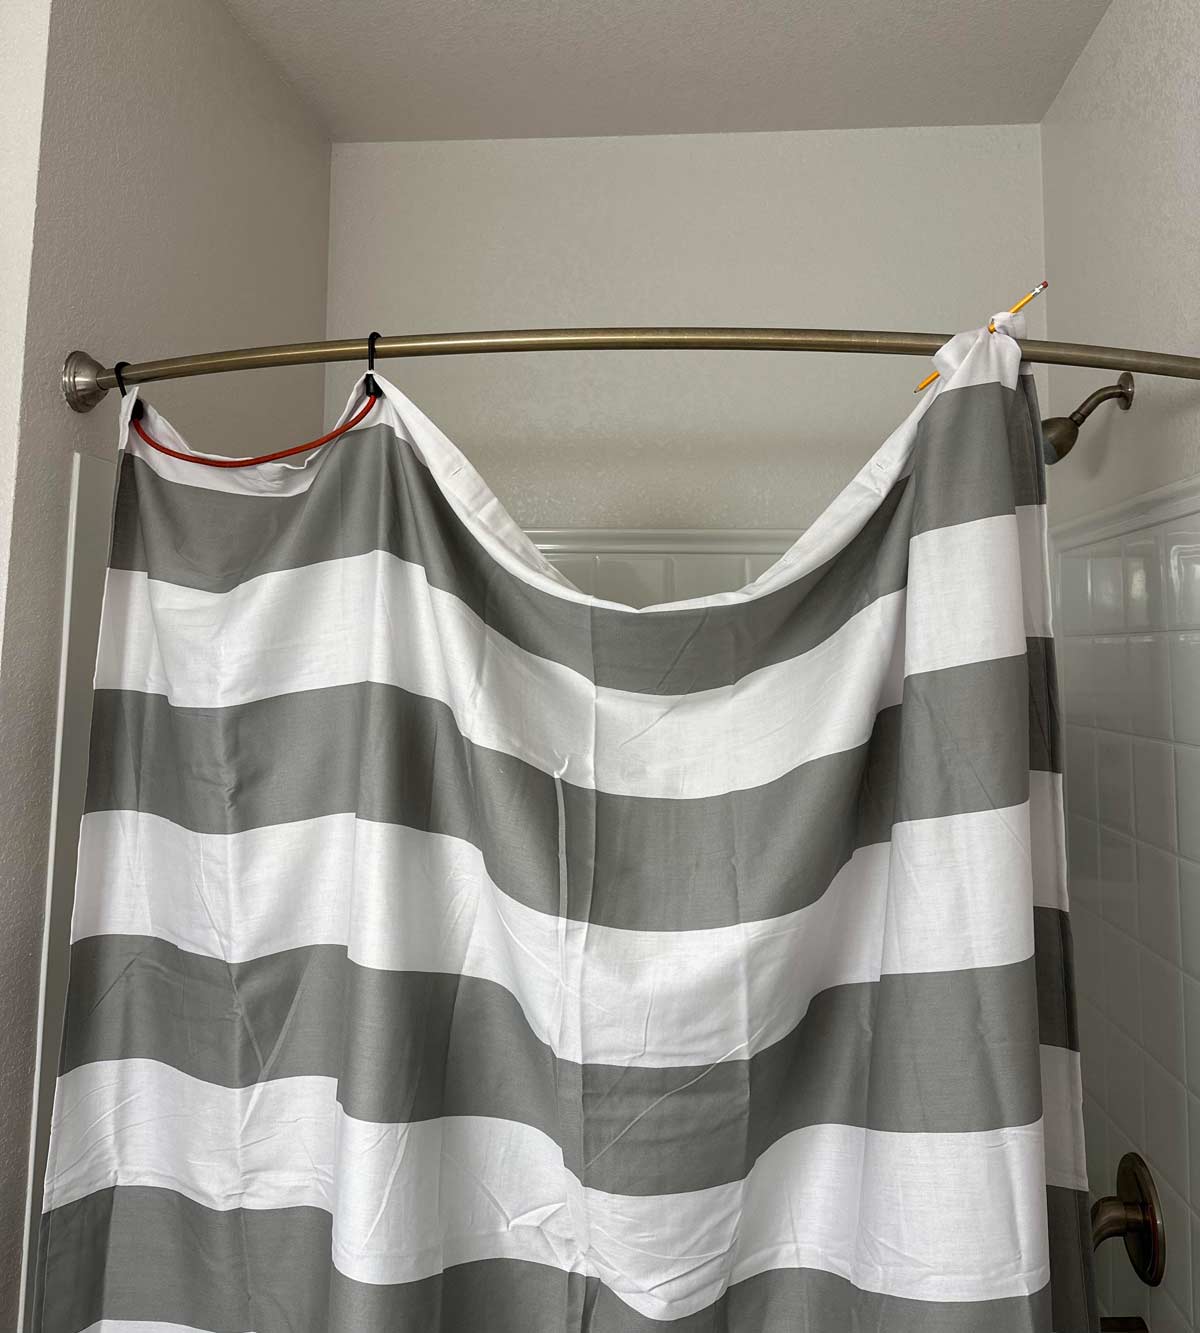 My boyfriend forgot to buy shower curtain rings